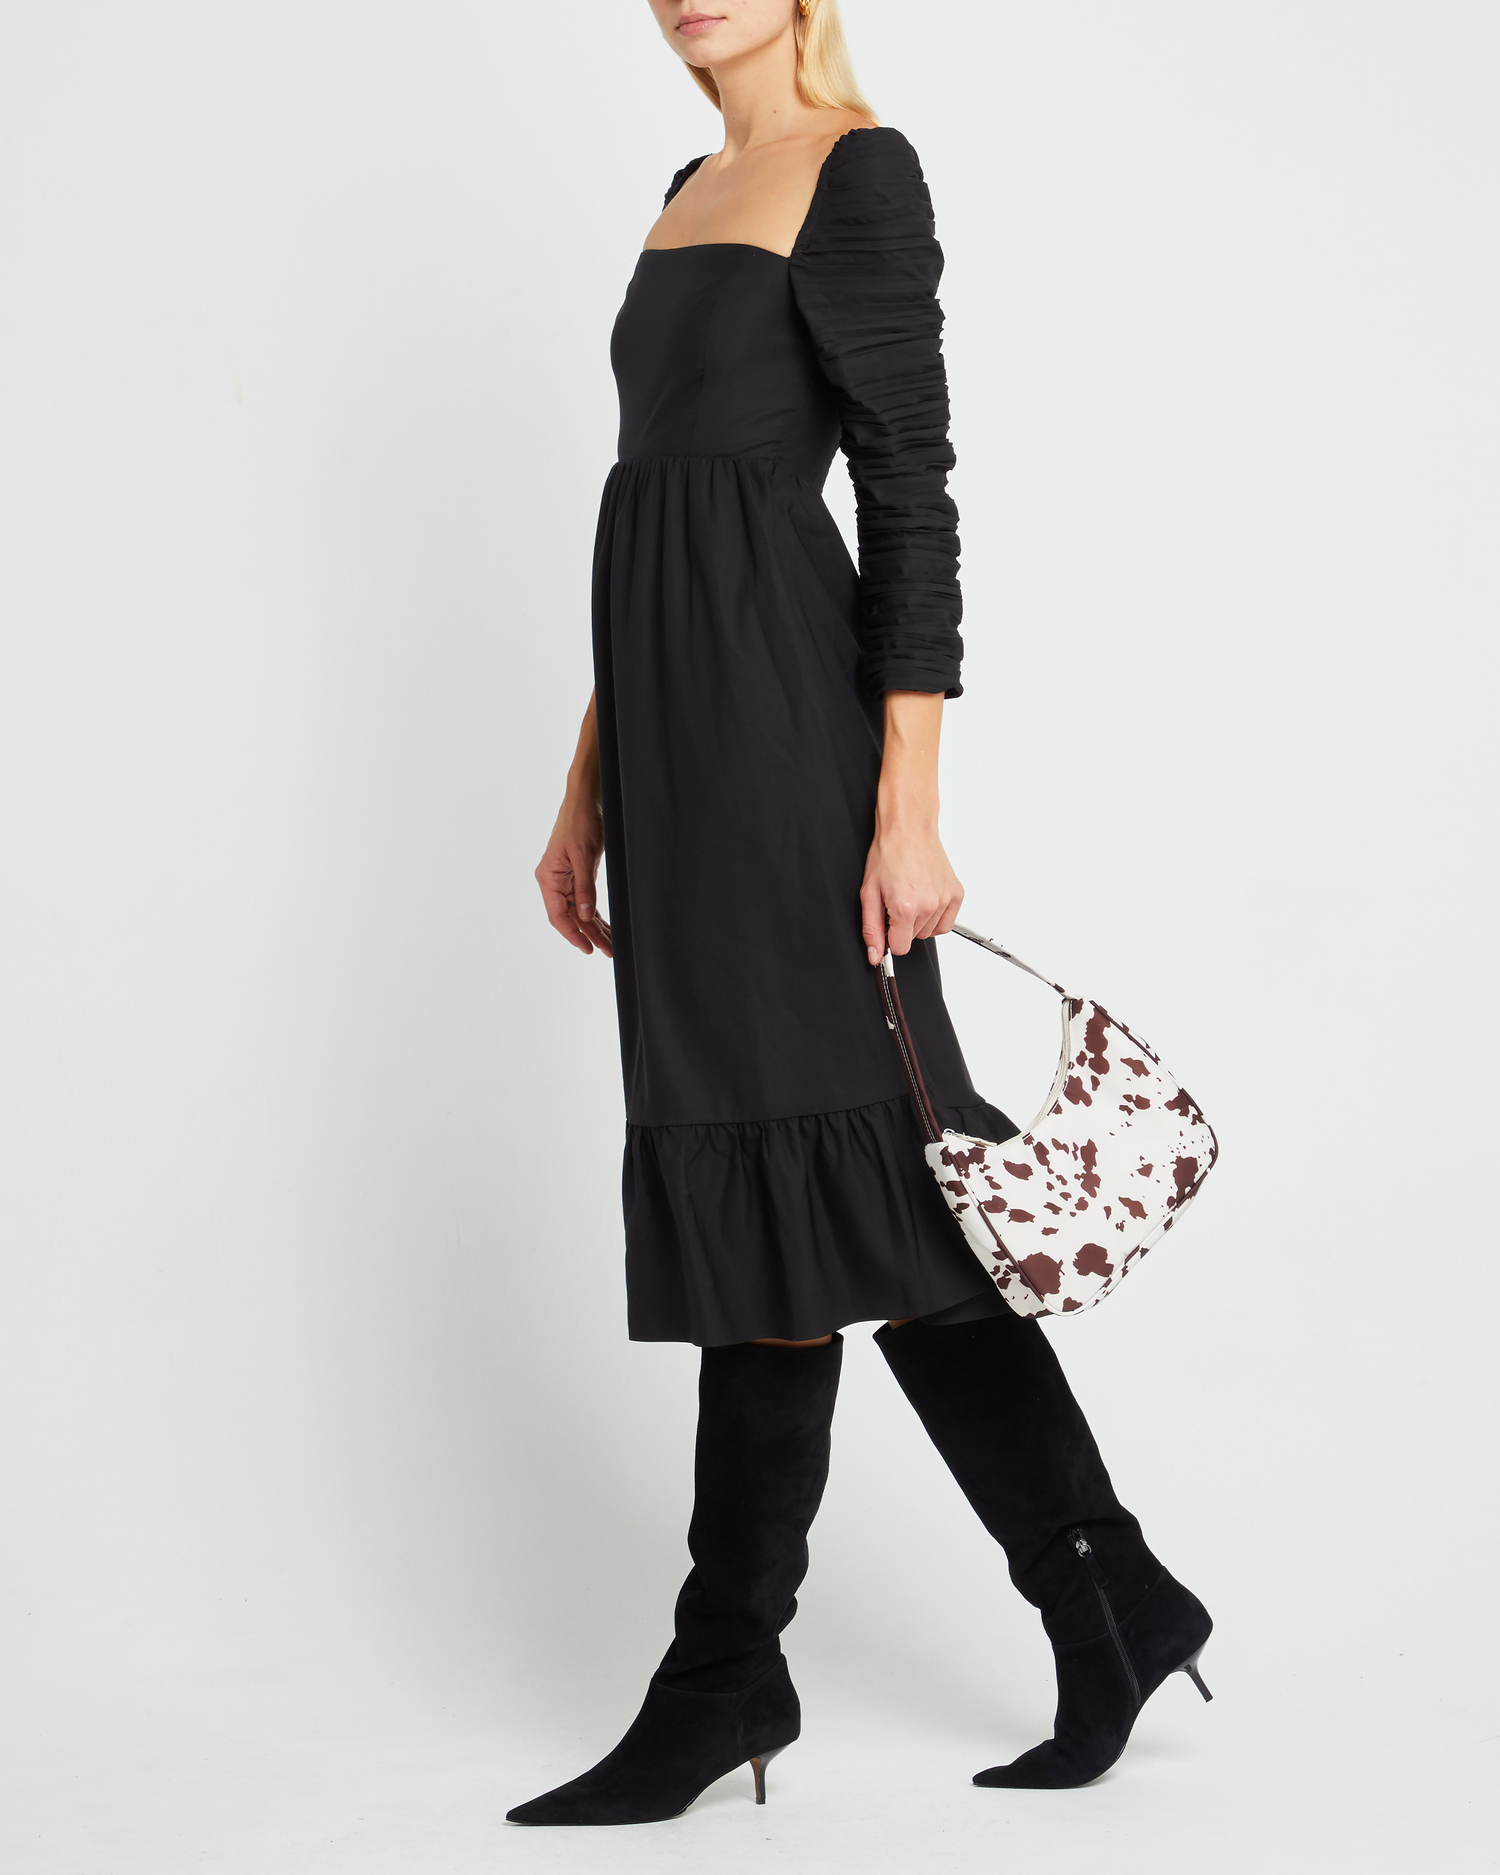 Third image of Bonnie Dress, a black midi dress, midi sleeves, 3/4 sleeves, square neckline, pockets, ruched